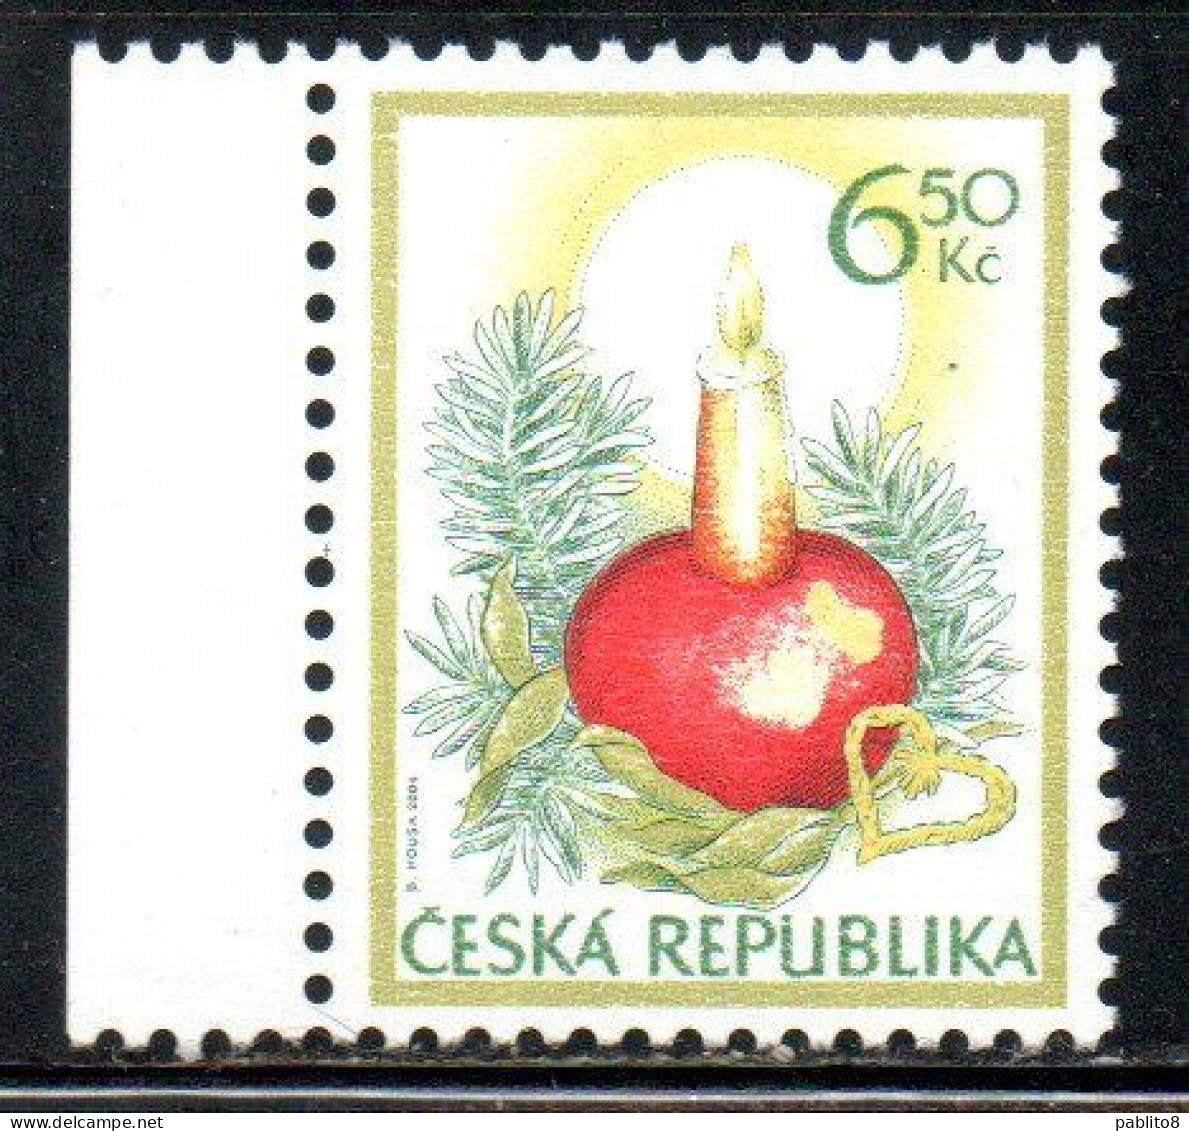 CZECH REPUBLIC CECA REPUBBLICA CZECHOSLOVAKIA 2004 CHRISTMAS NATALE NOEL WEIHNACHTEN NAVIDAD 6.50k MNH - Ongebruikt